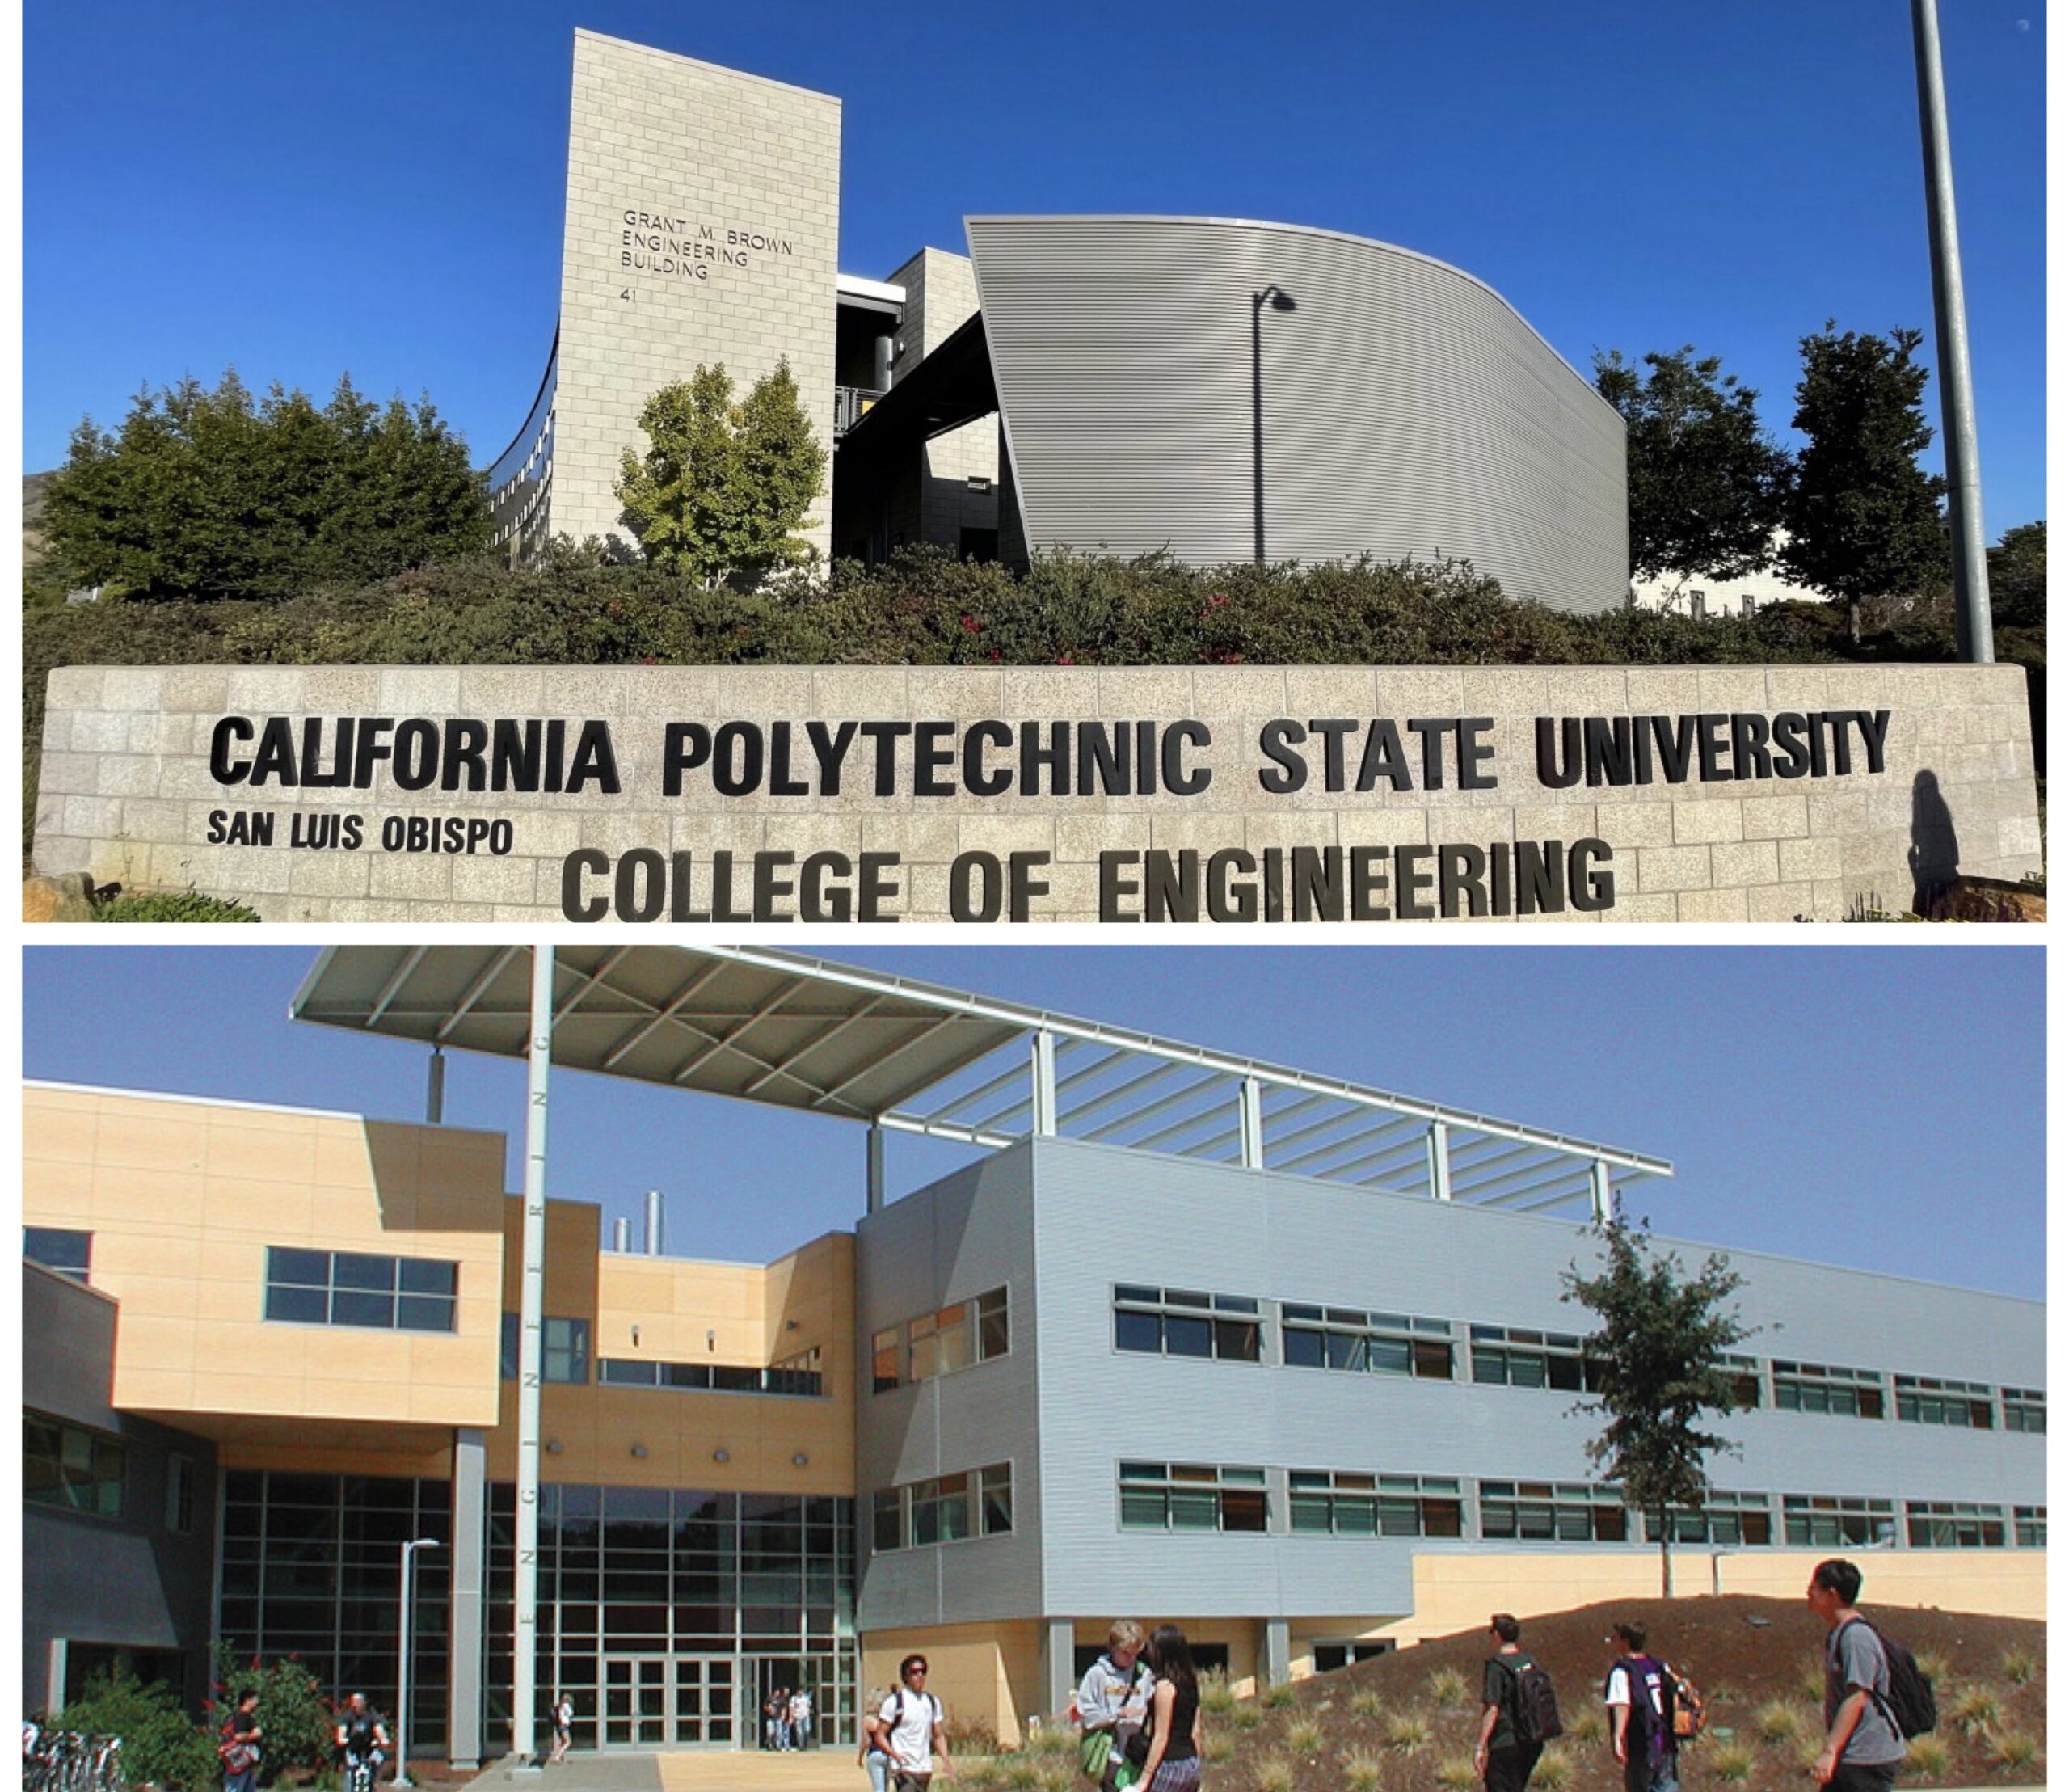 california-polytechnic-state-university-san-luis-obispo-acceptance-rate-tuition-ranking-scholarships-programs-address-fees